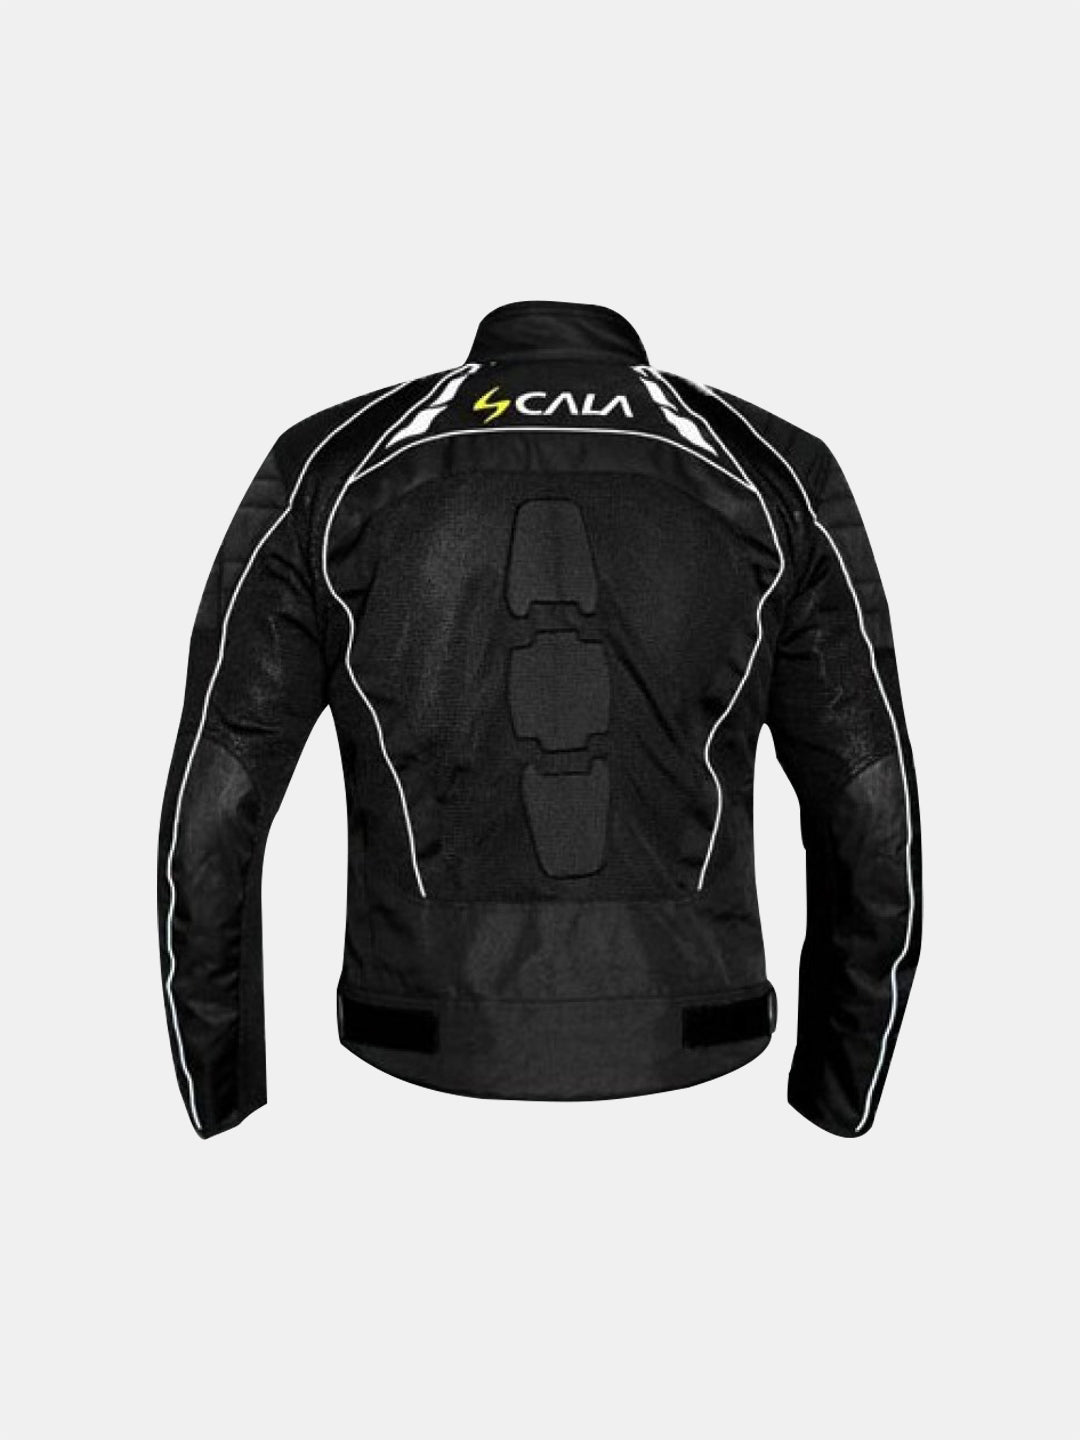 Scala Marvel V2 Black Jacket